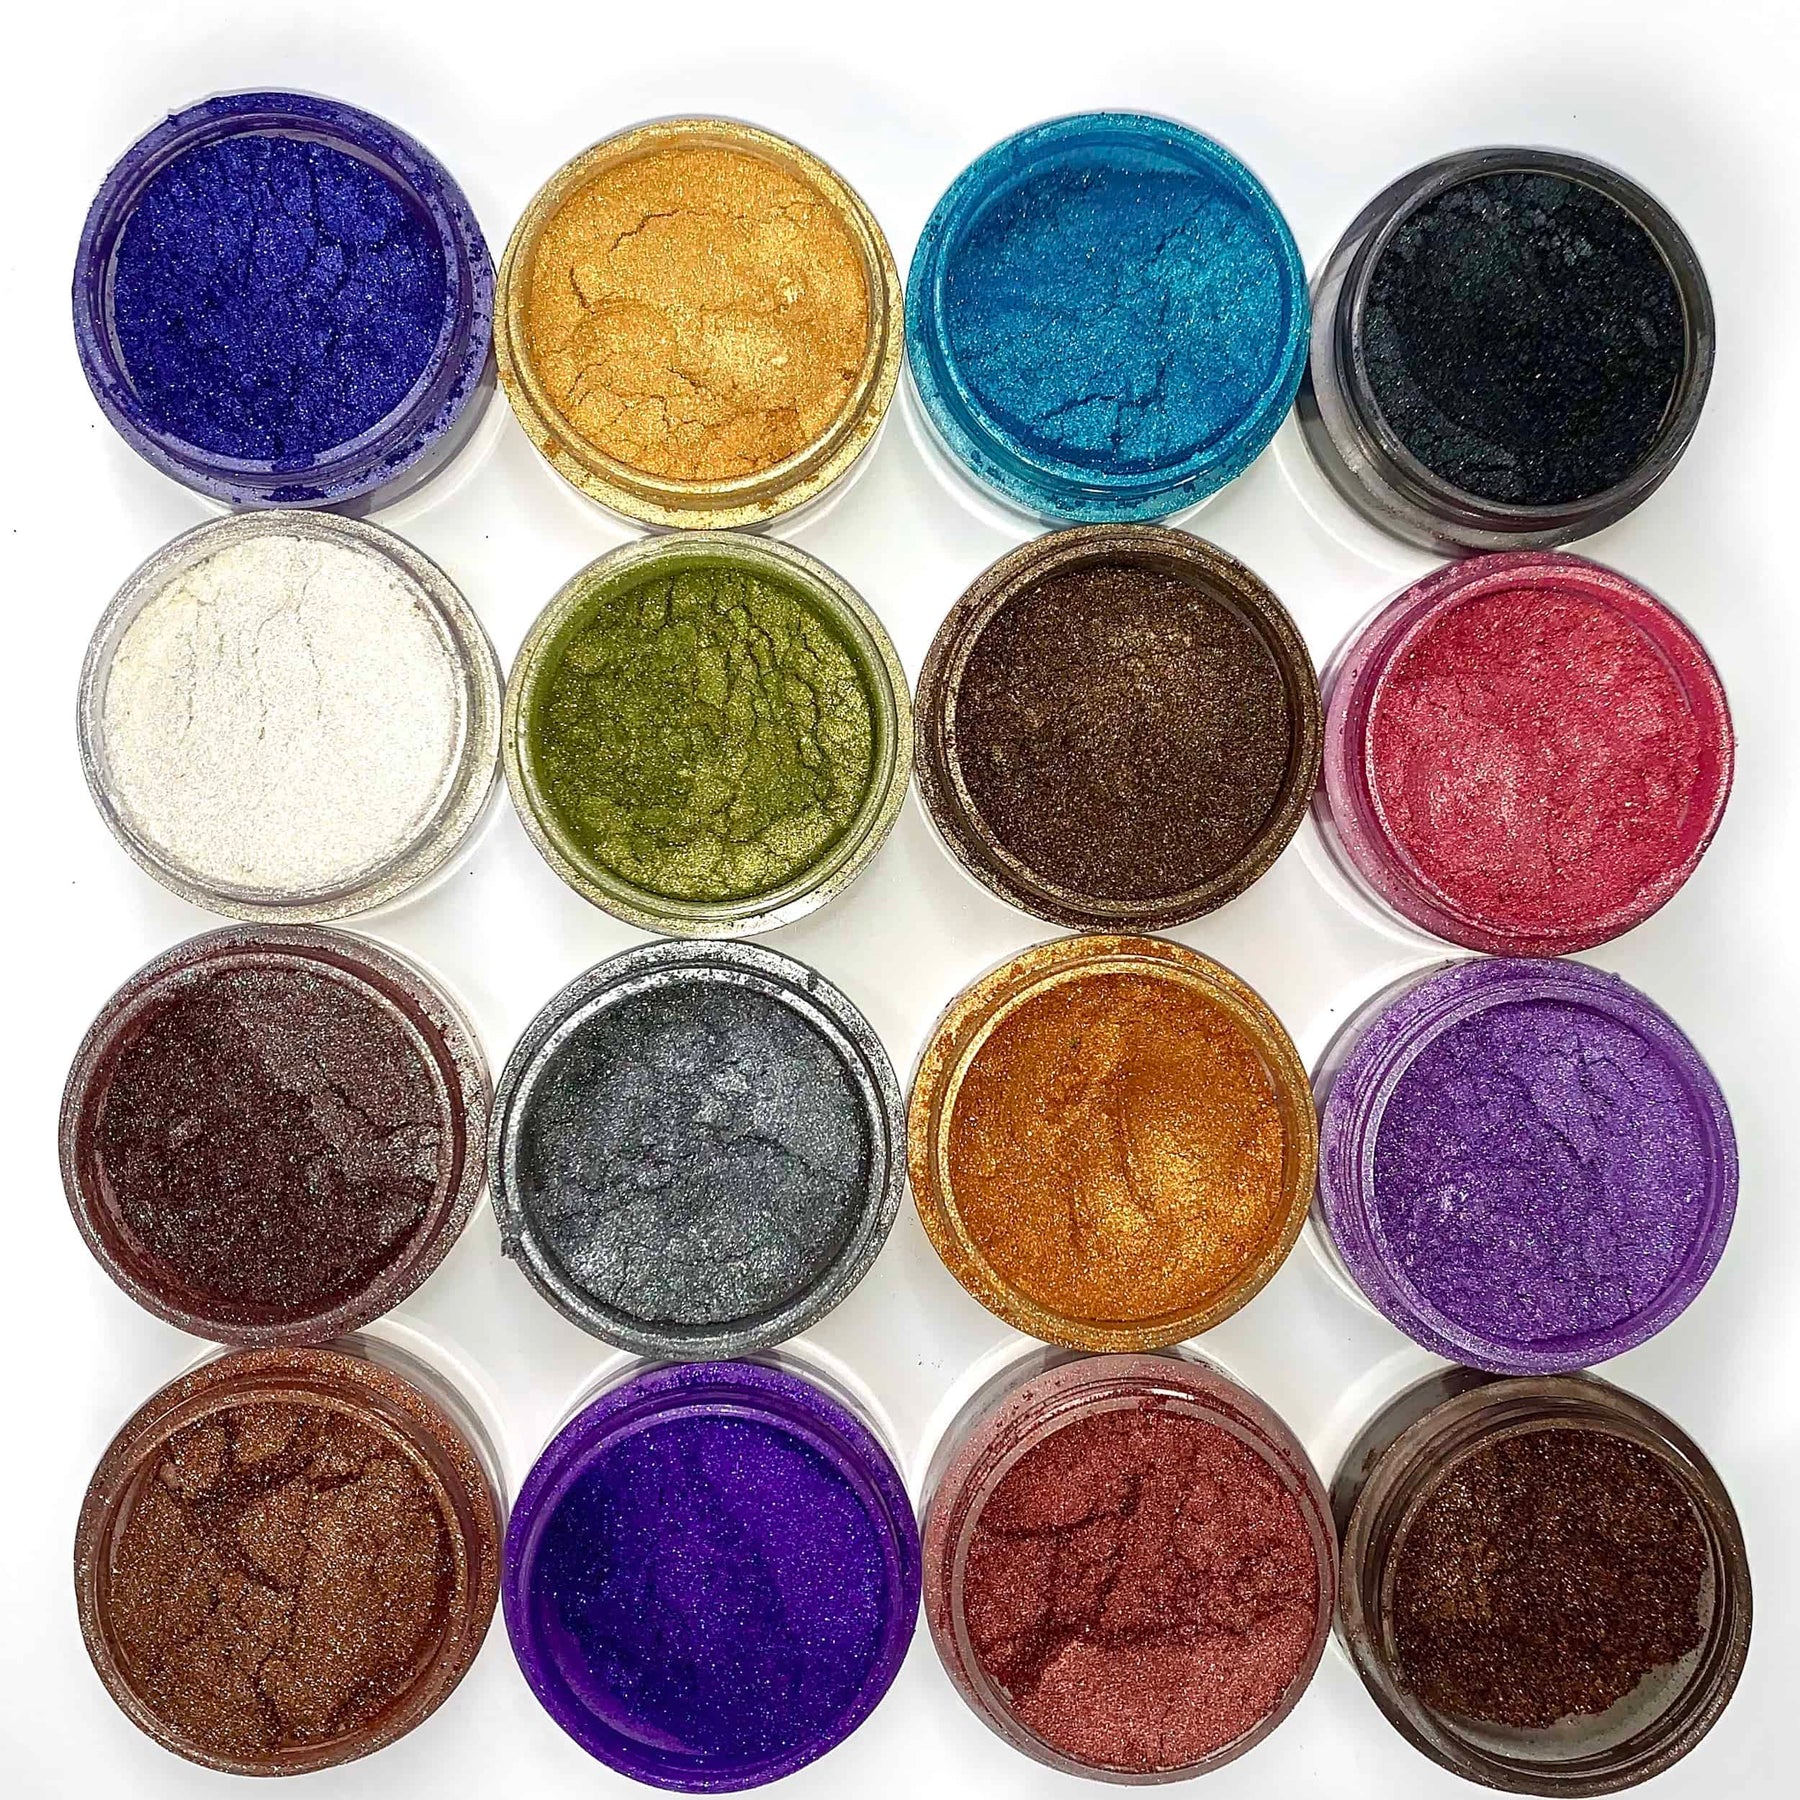 Mica Powder Essential Series, 24 colors Set (10g/ 0.3oz each